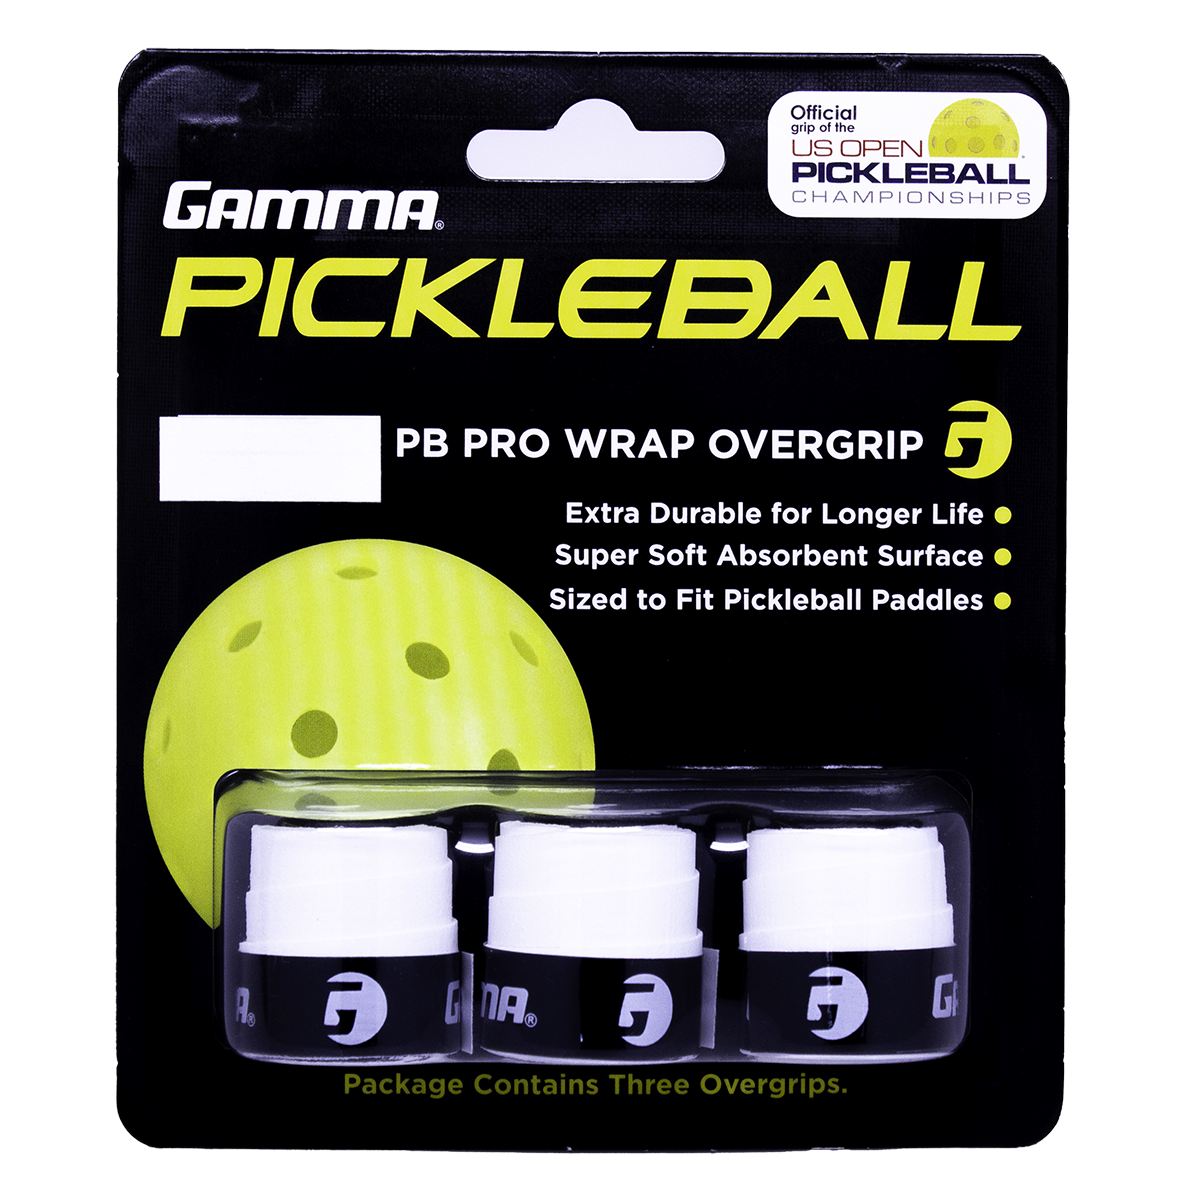 GAMMA - Pickleball Pro Wrap Overgrip